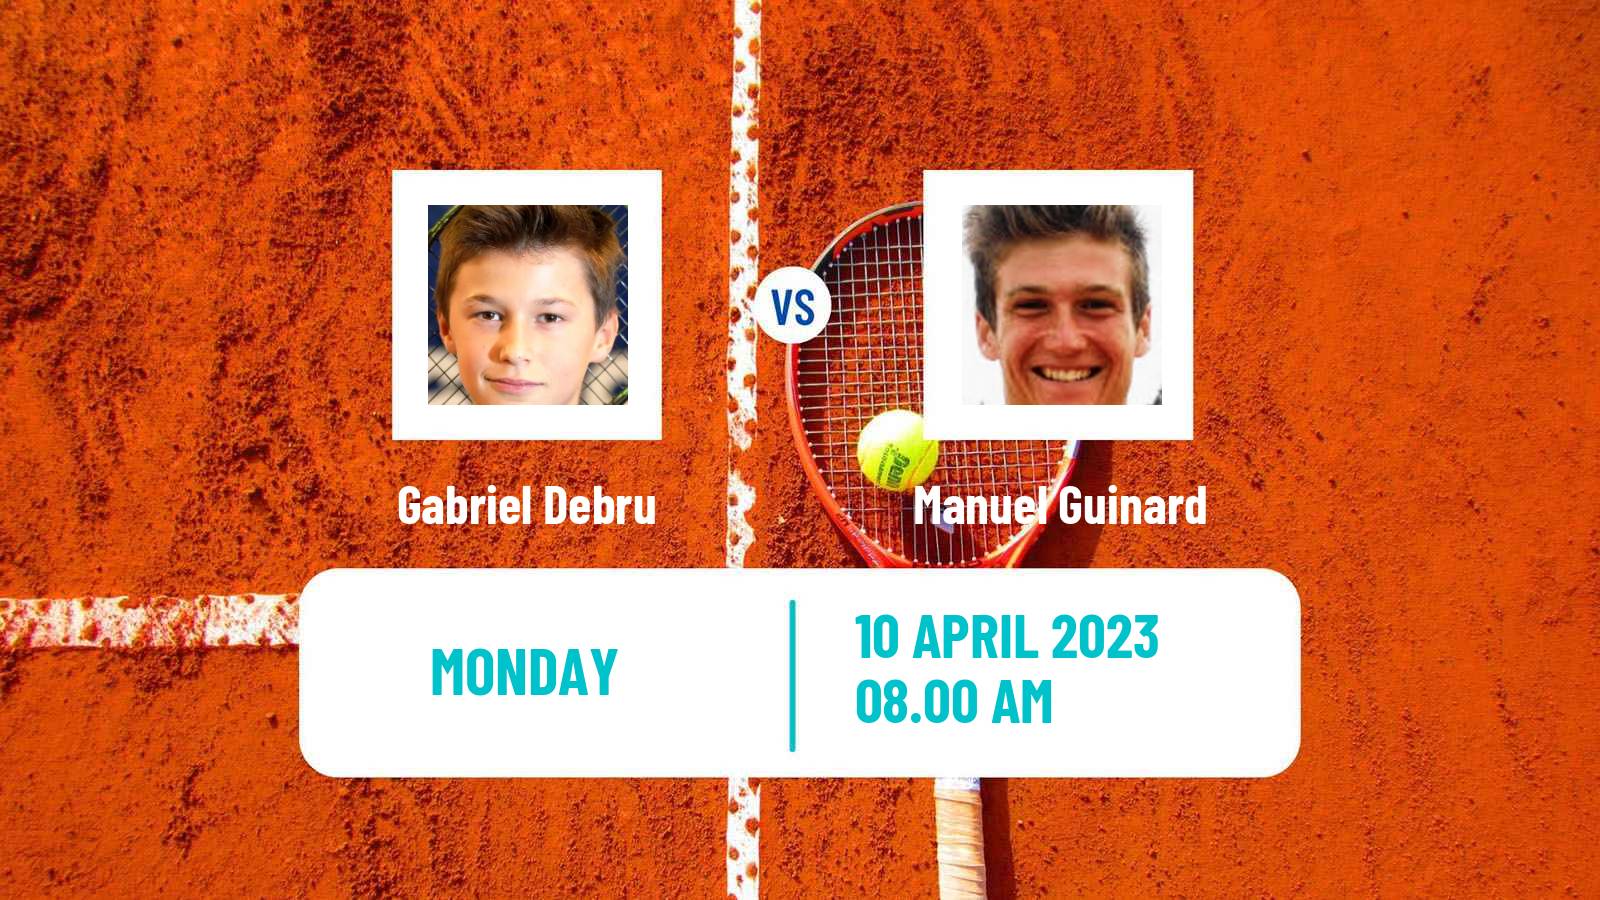 Tennis ATP Challenger Gabriel Debru - Manuel Guinard